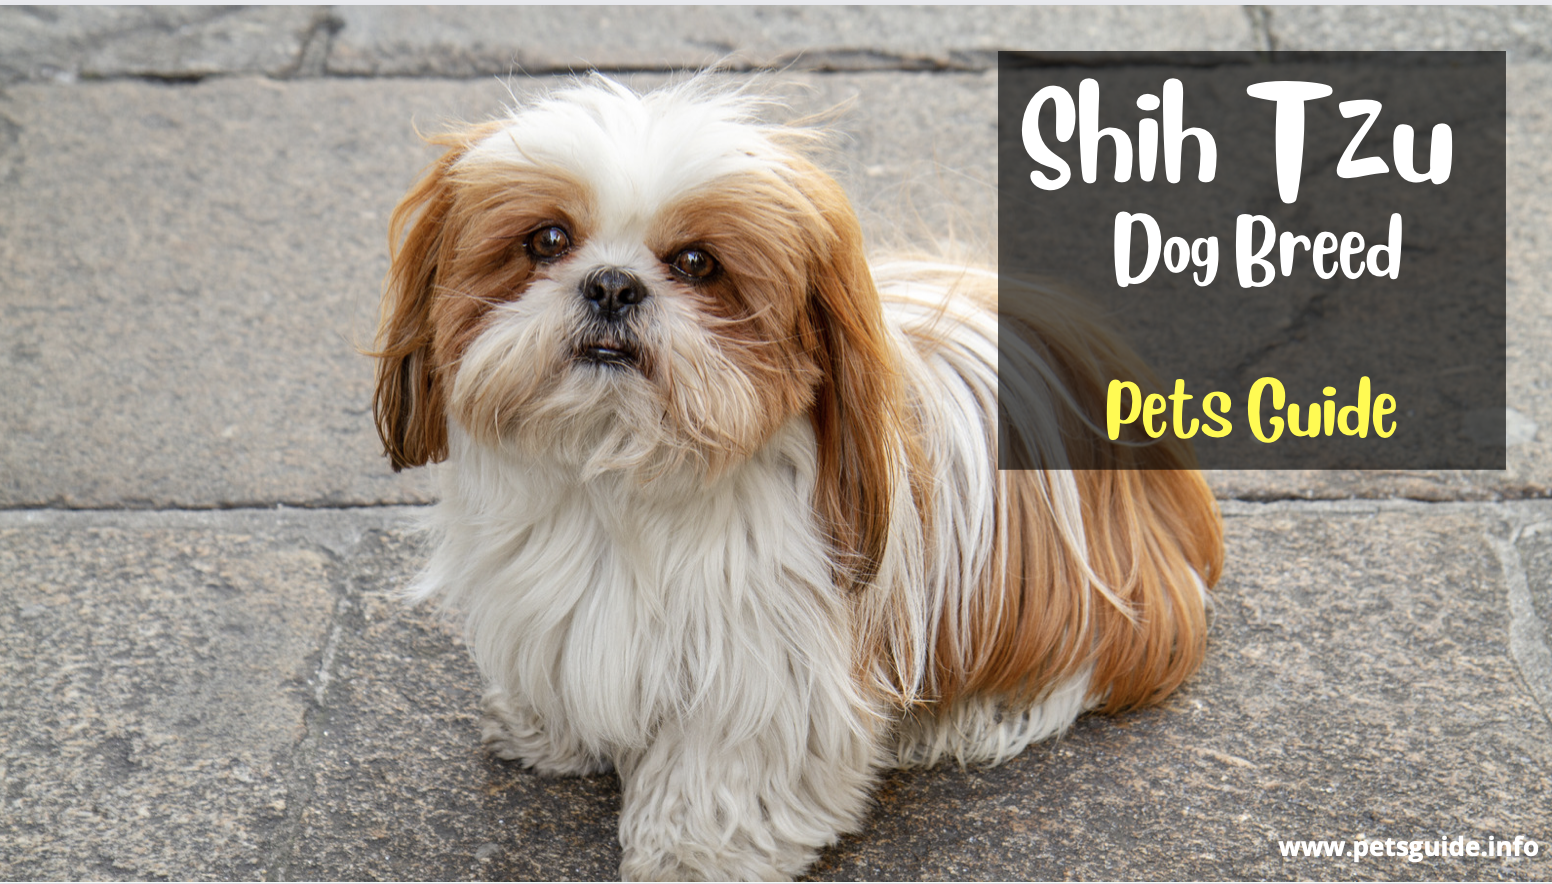 Shih Tzu Dog Breed (History, Grooming, Cost + Lifespan)